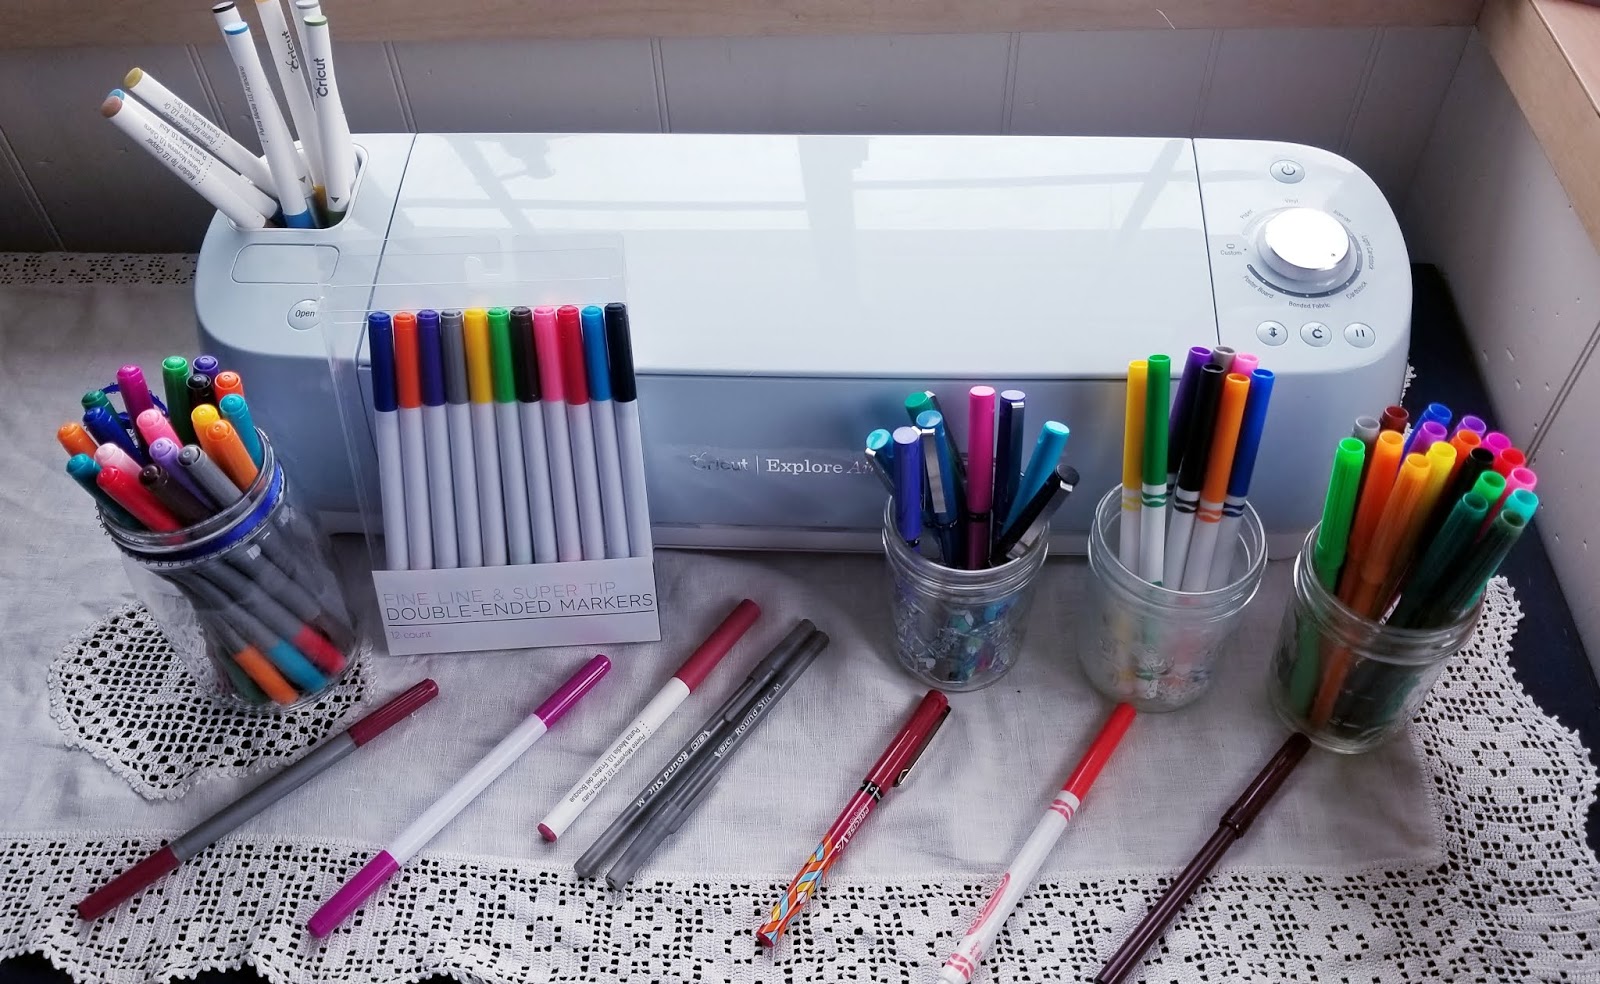 REALIKE Metallic Pens for Cricut Maker 3/Maker/Explore 3/Air 2/Air,  Multicolor Marker Pens Set of 12 Pack Drawing Coloring Pens Compatible with  Cricut